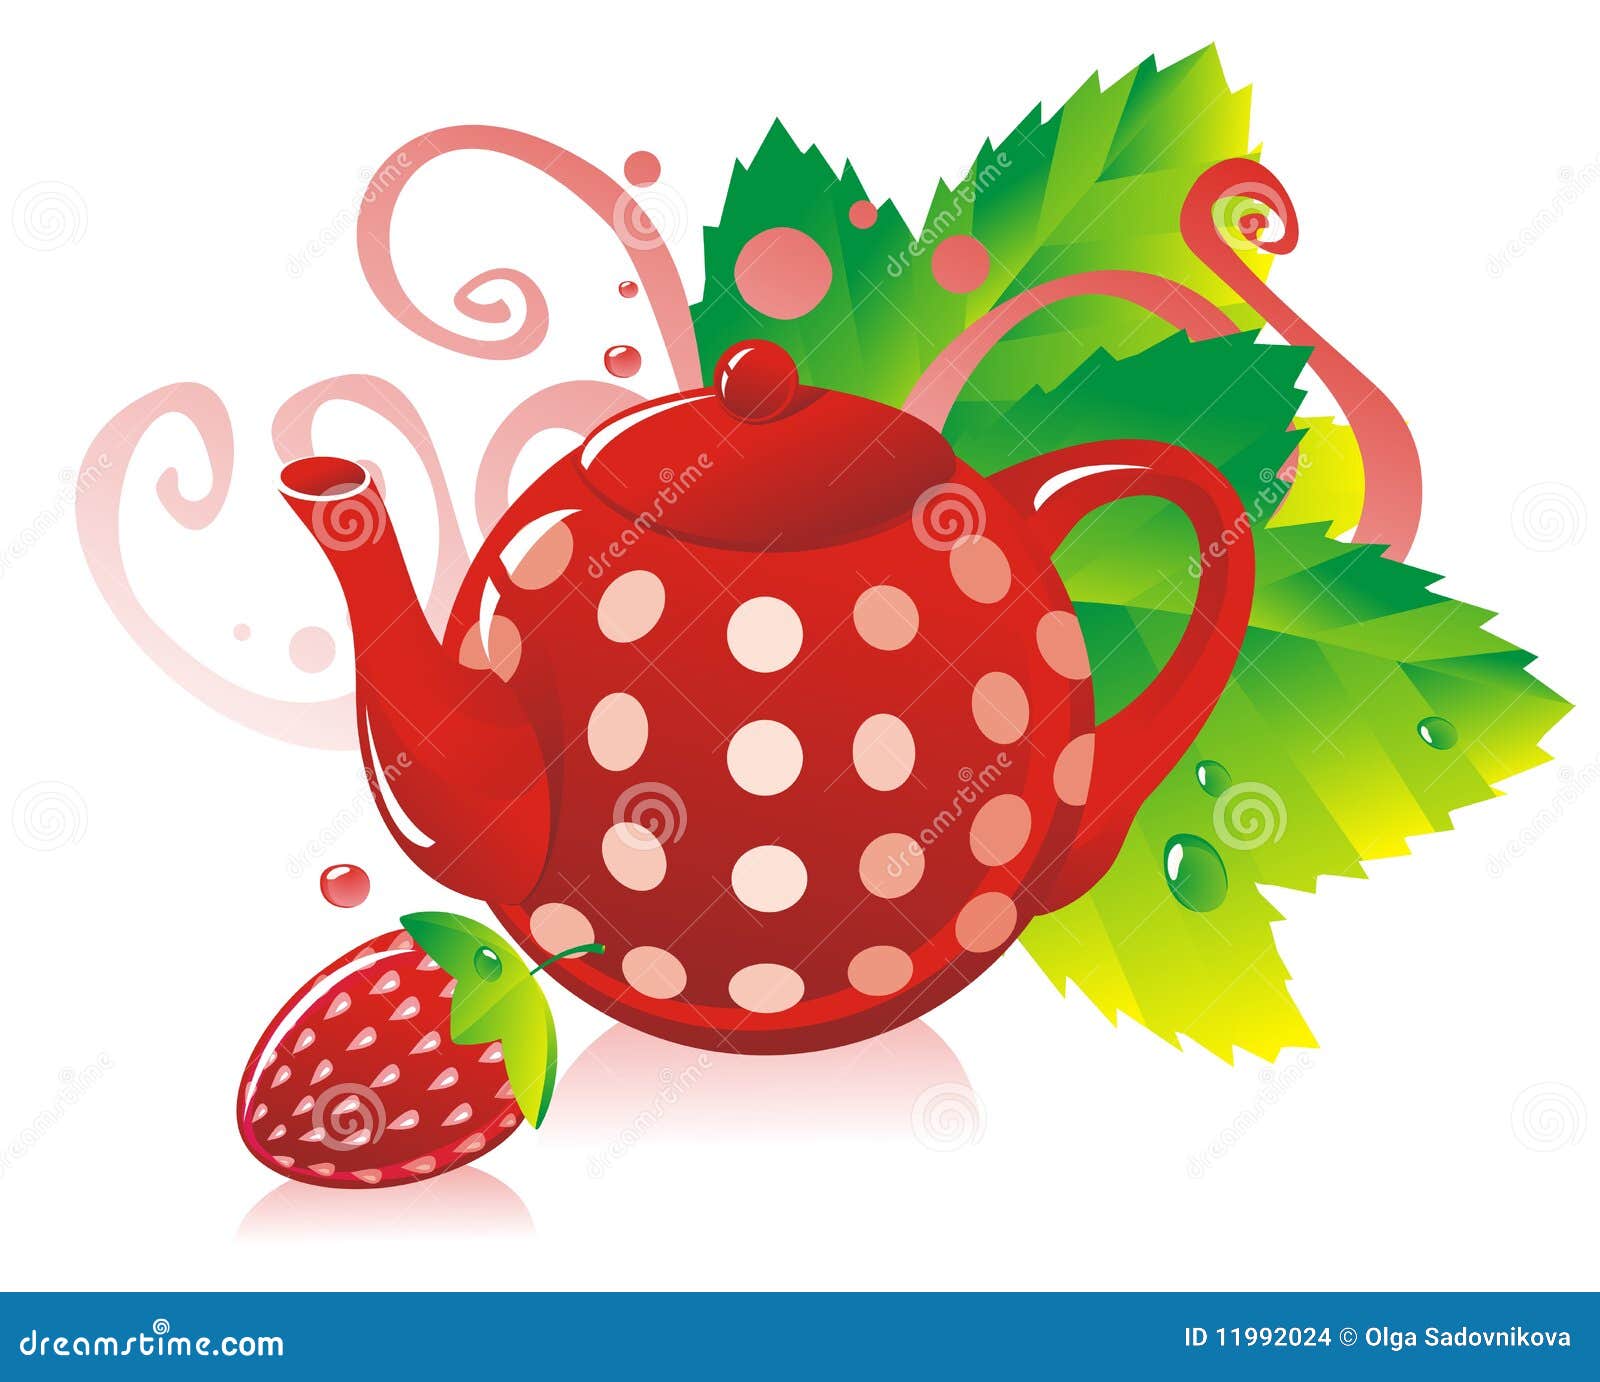 strawberry tea clipart - photo #42